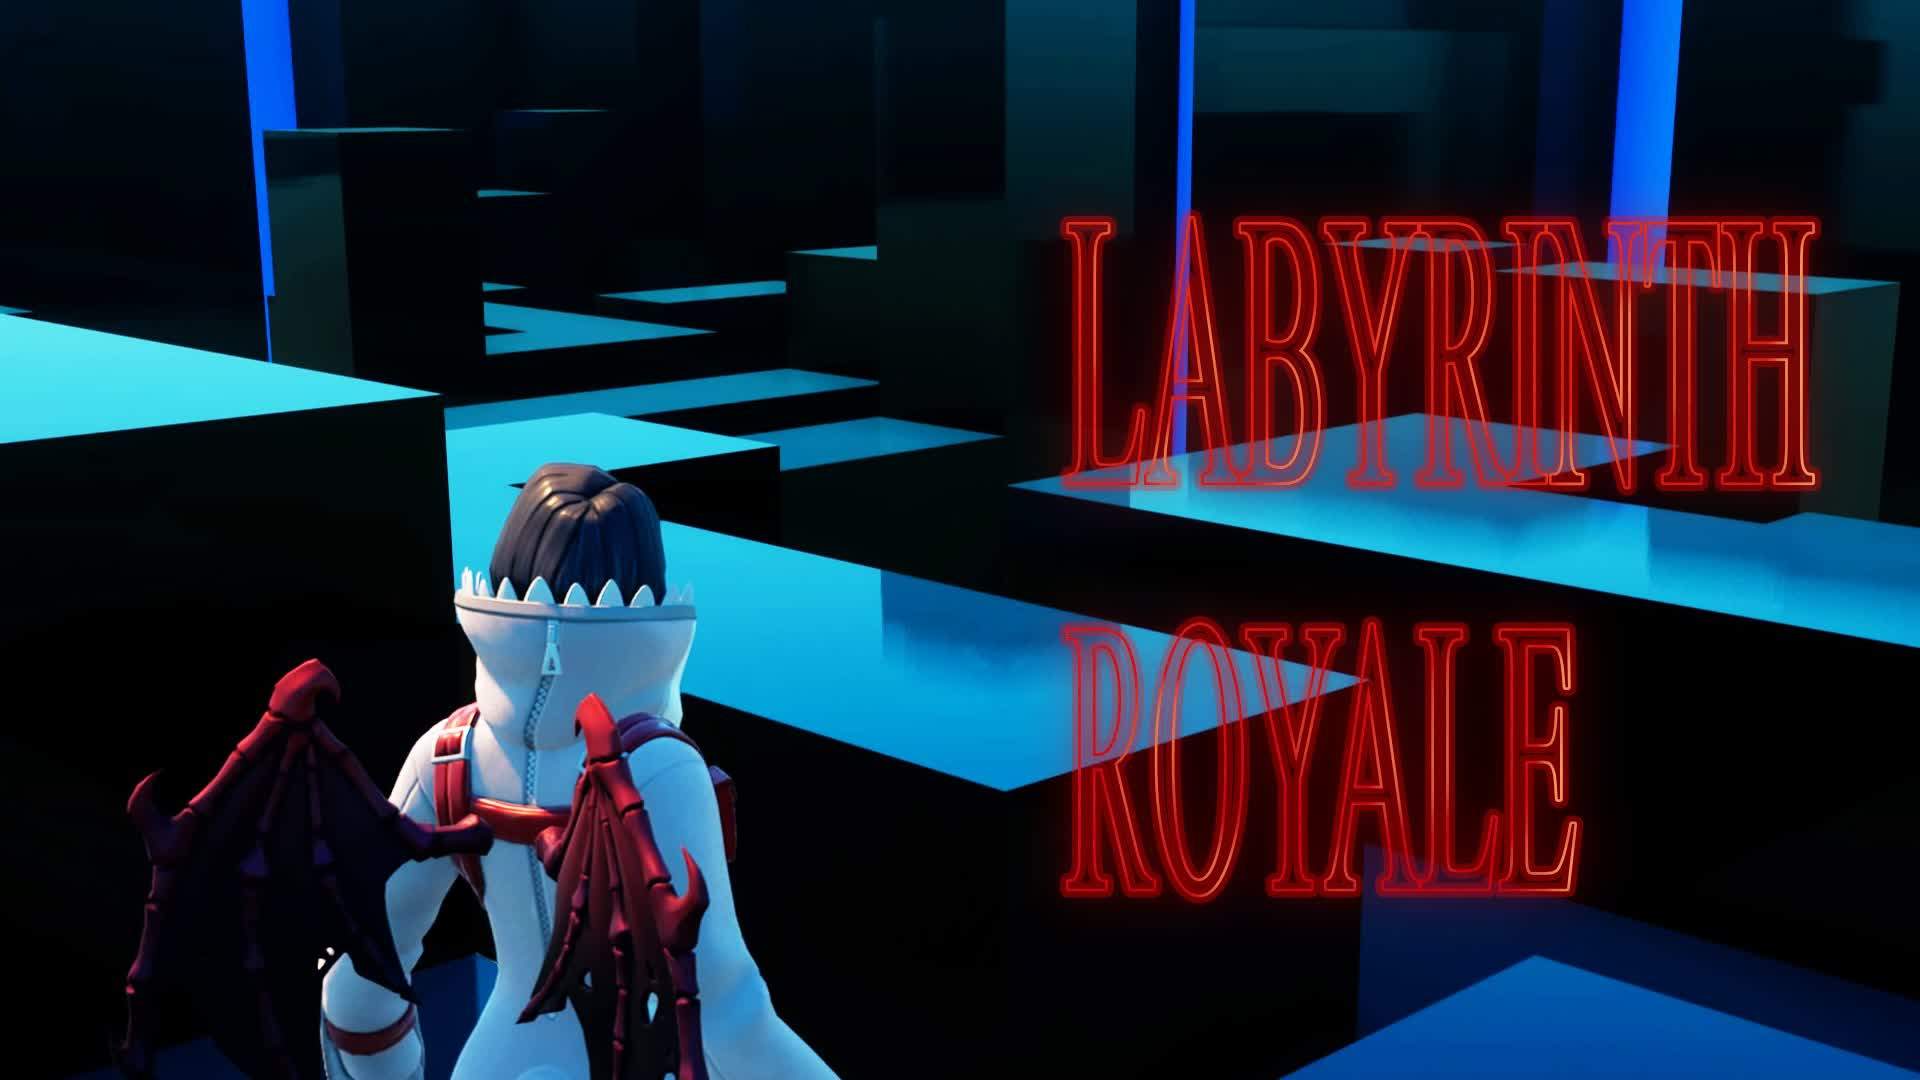 Labyrinth Royale